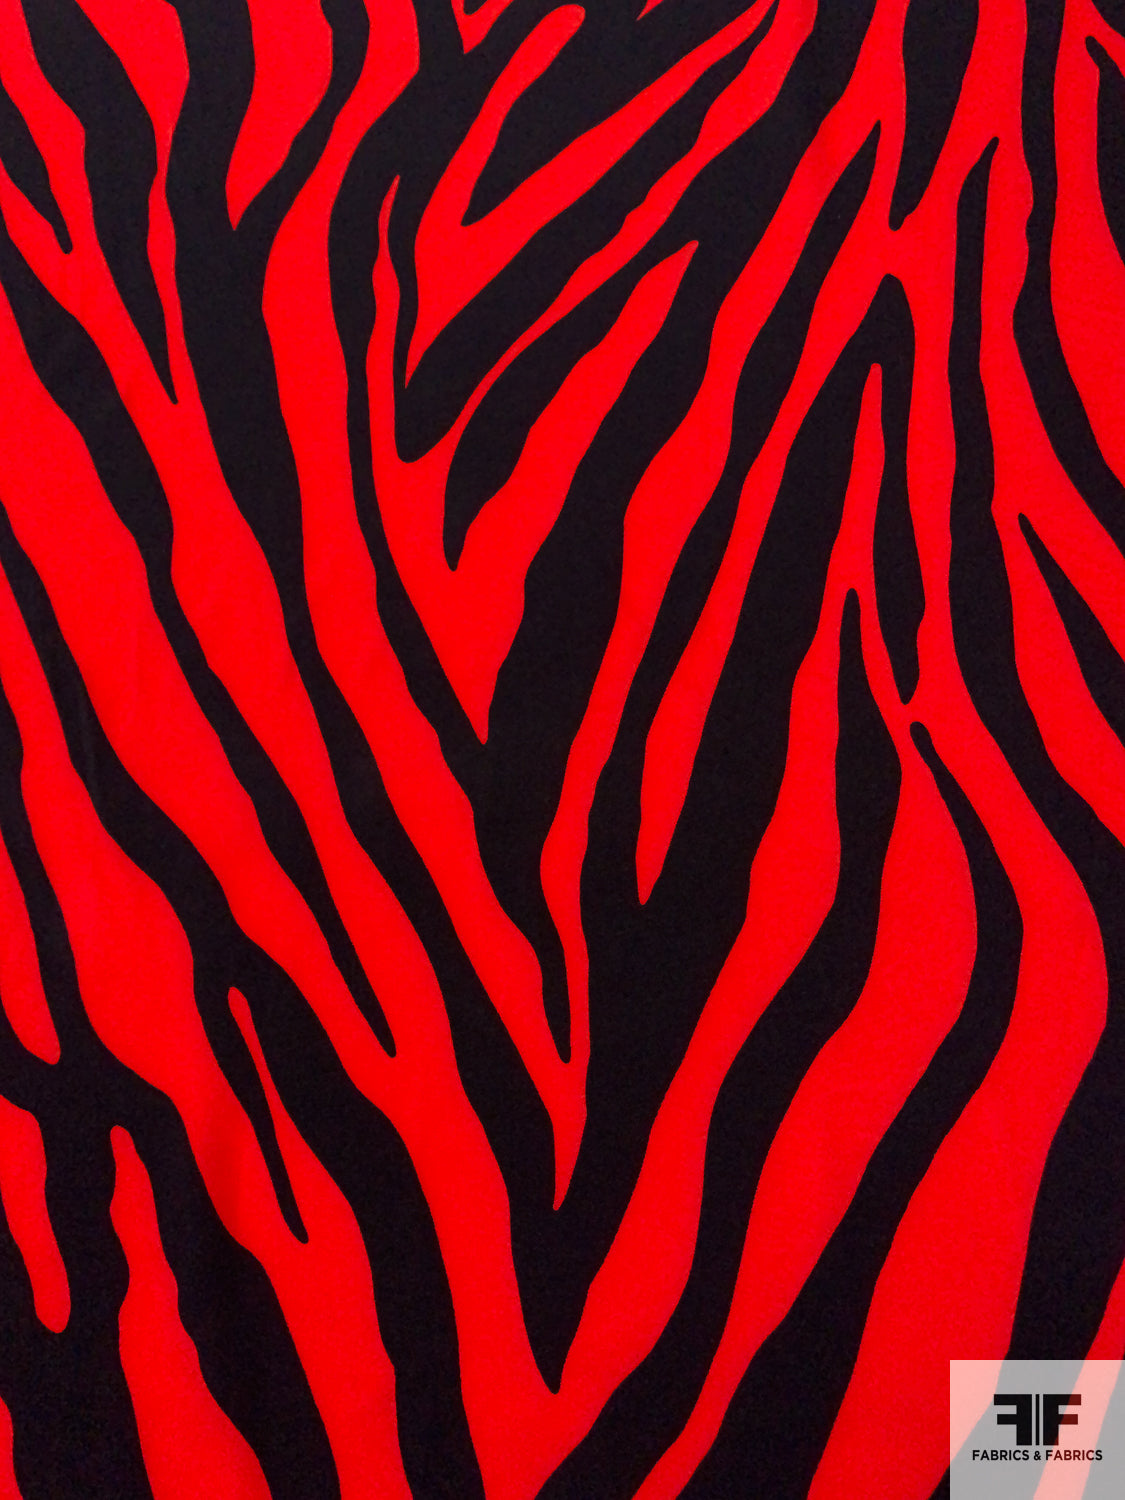 red and black zebra print background